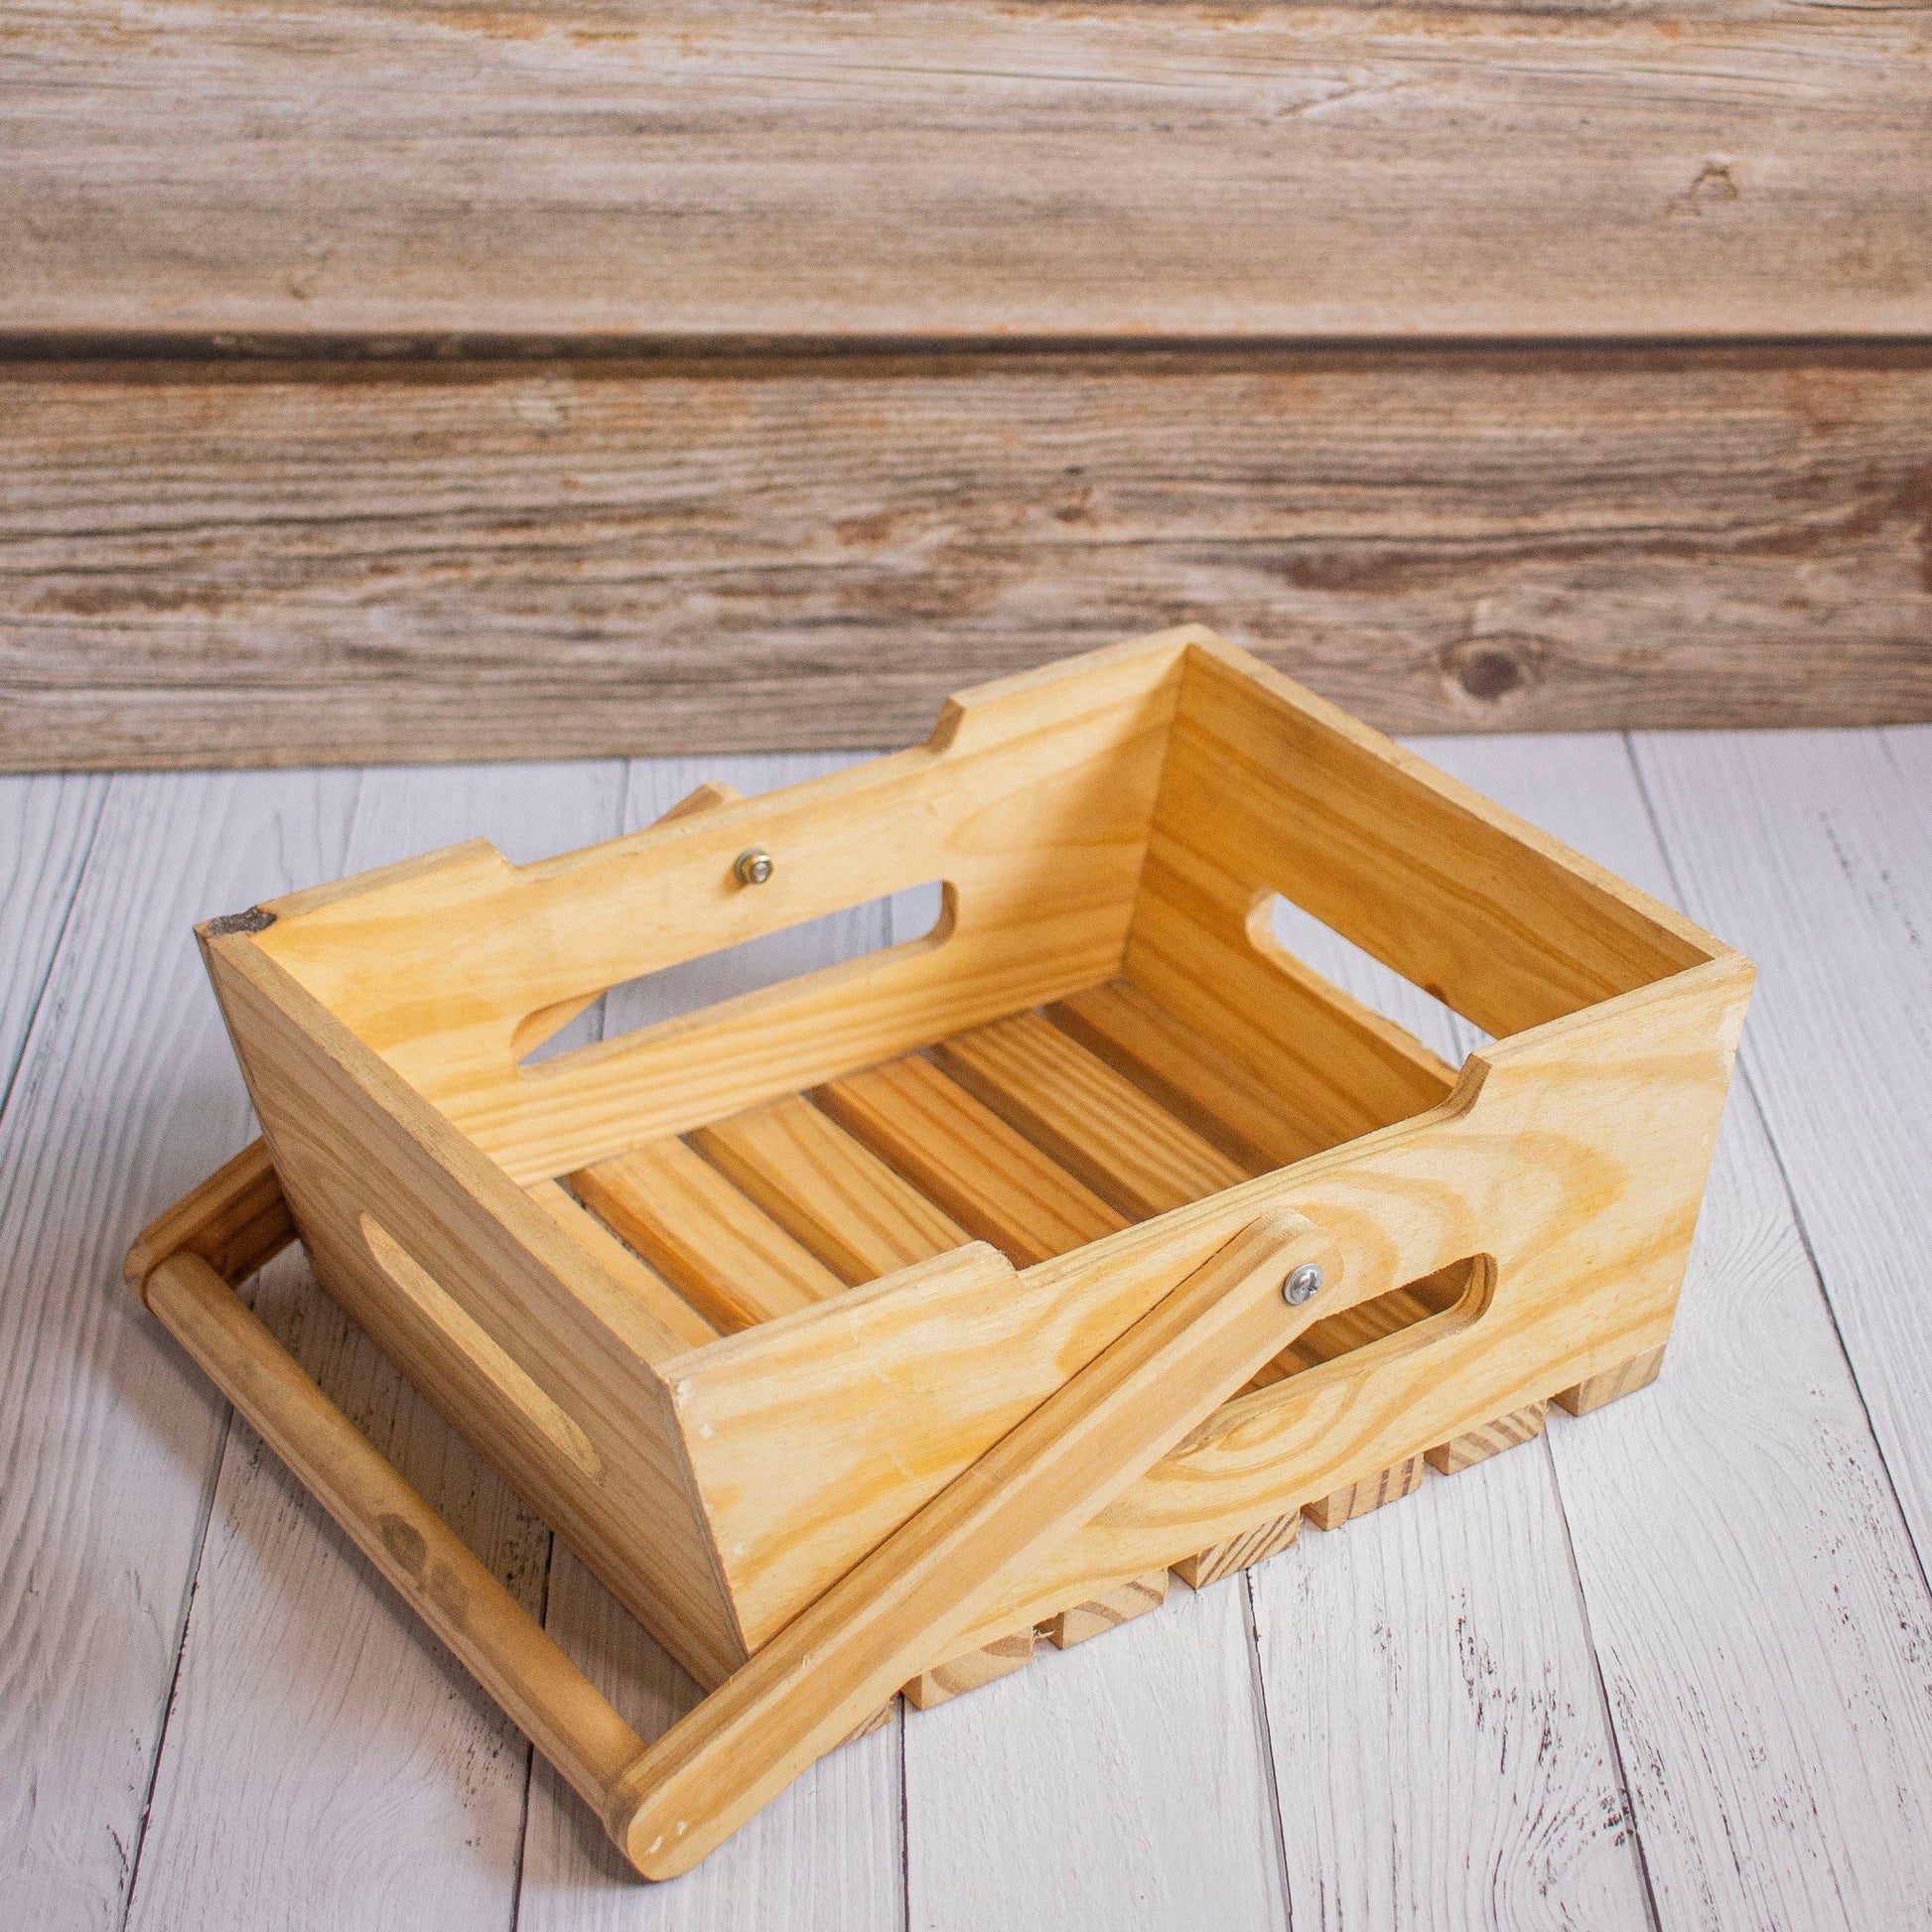 Red Riding Hood : Pine Wood Gifting Baskets - Ebony WoodcraftsGifting Baskets